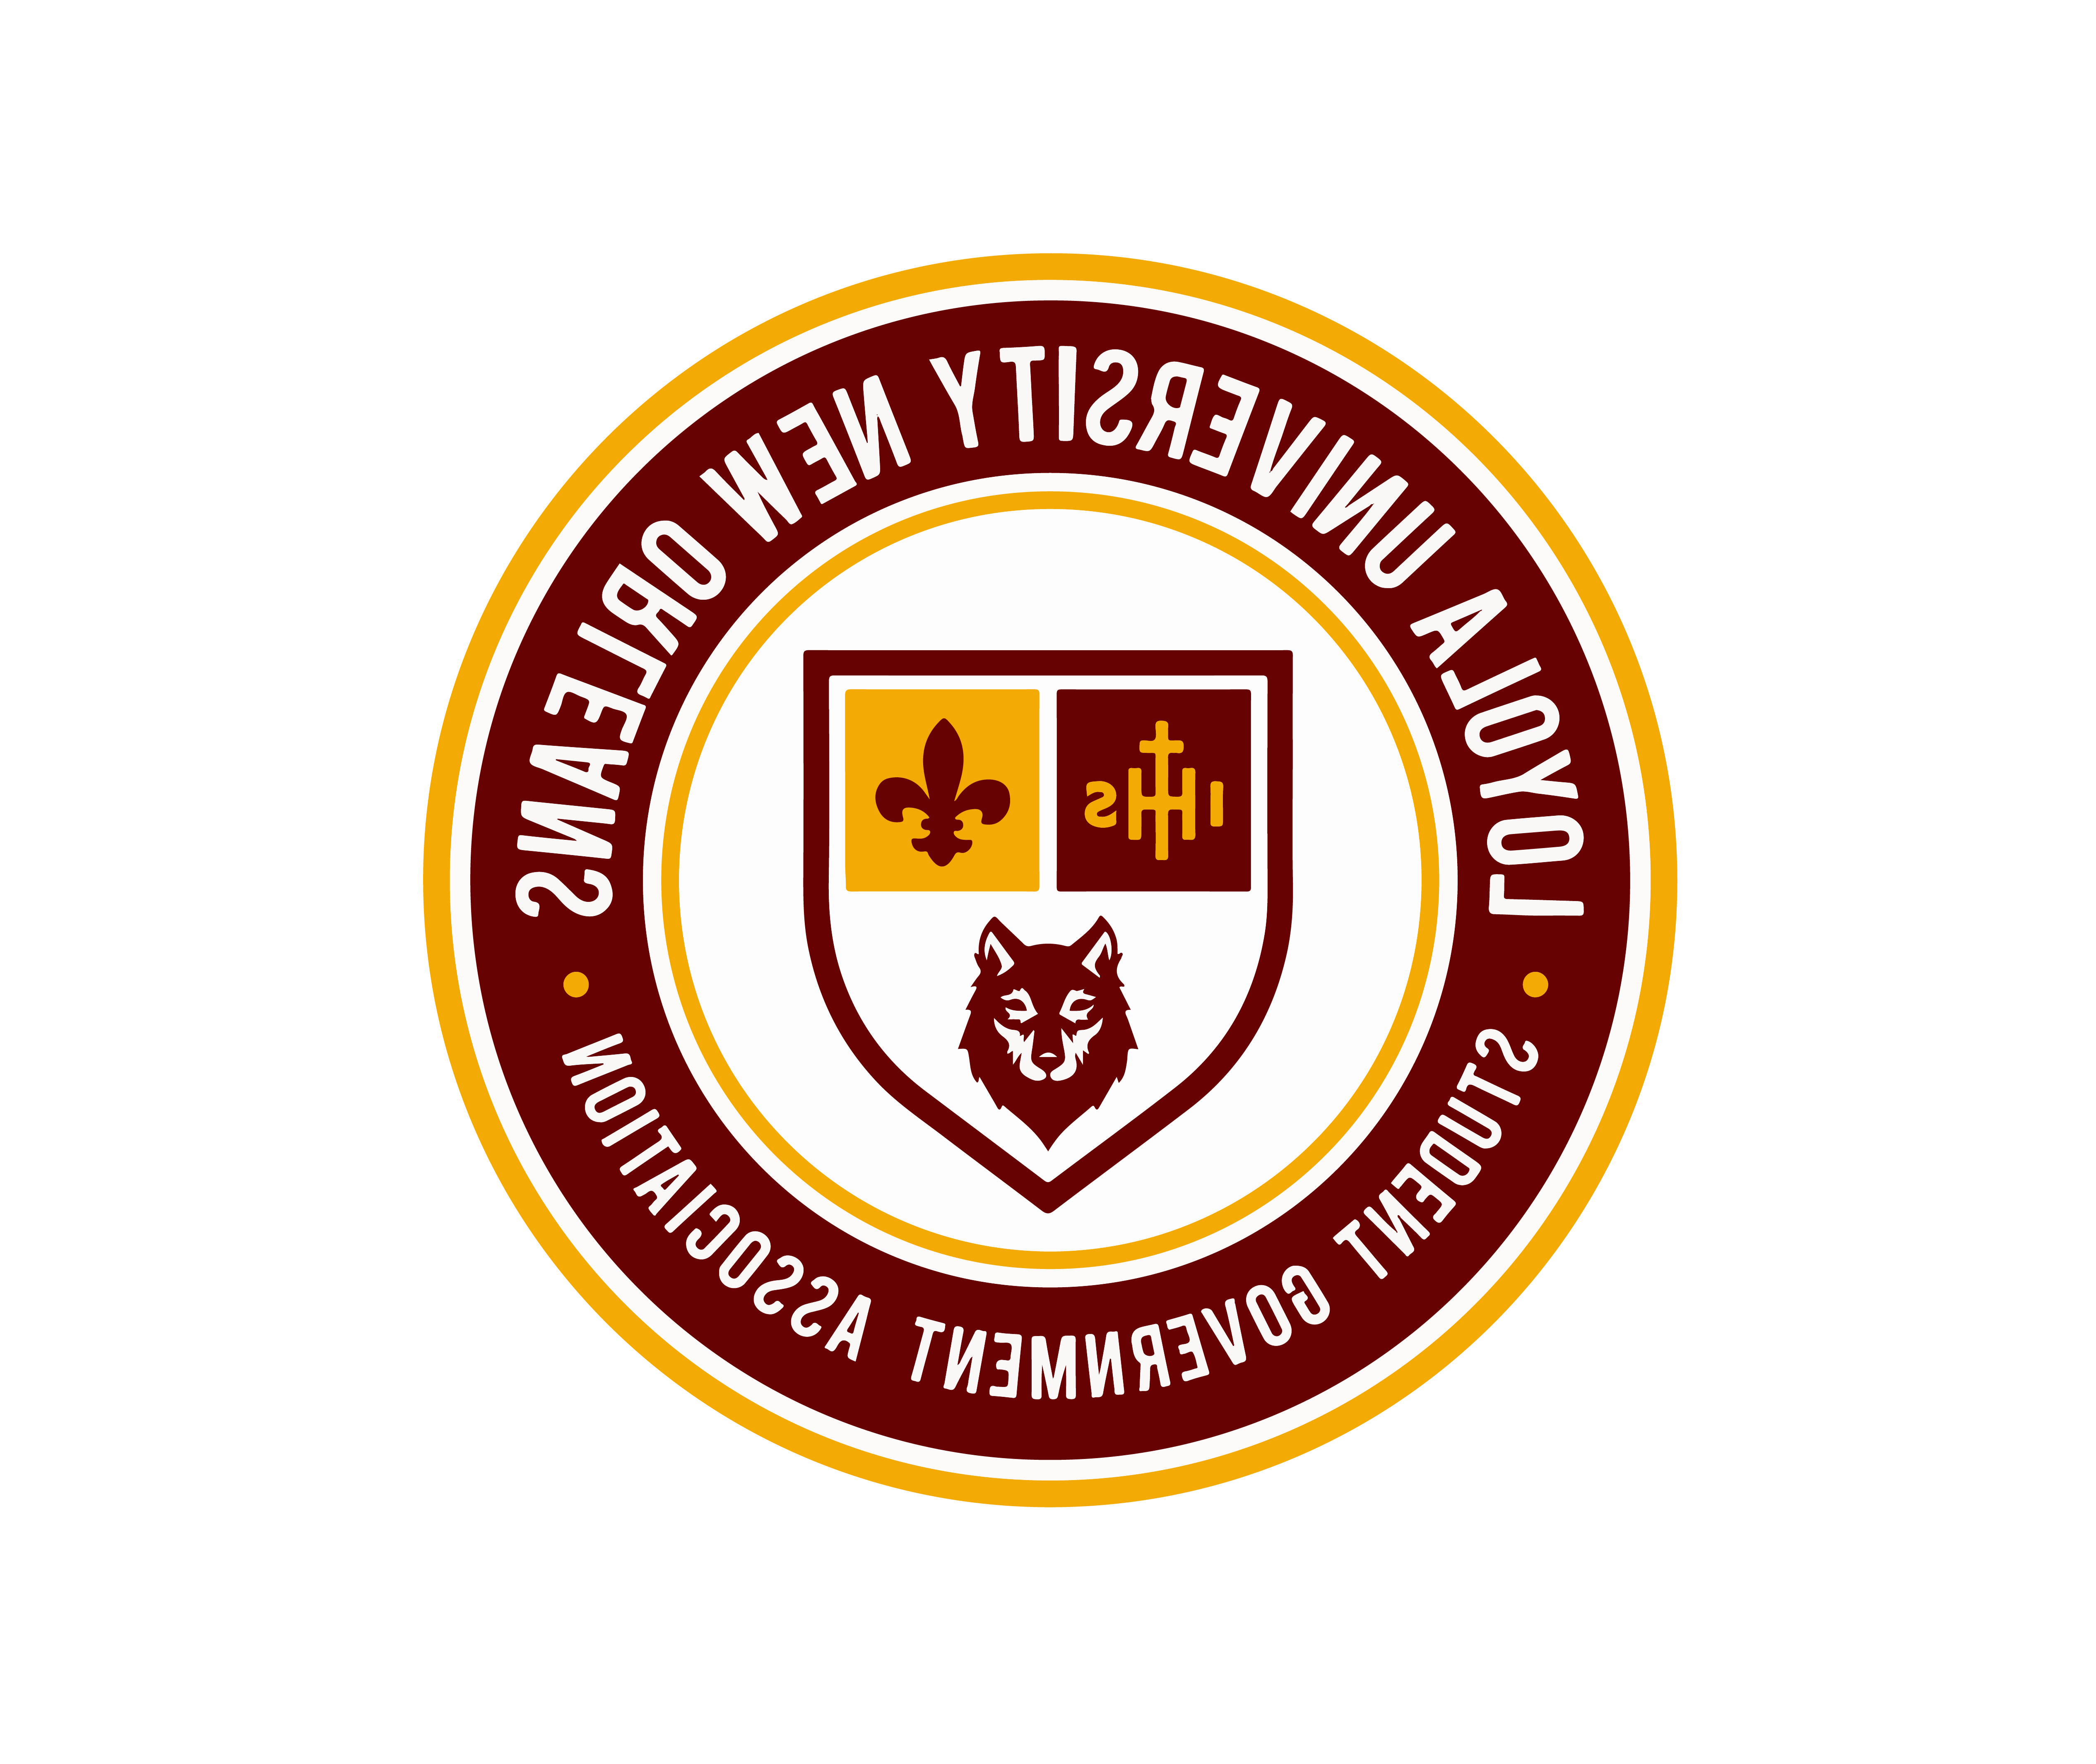 A photo of the Loyola SGA crest